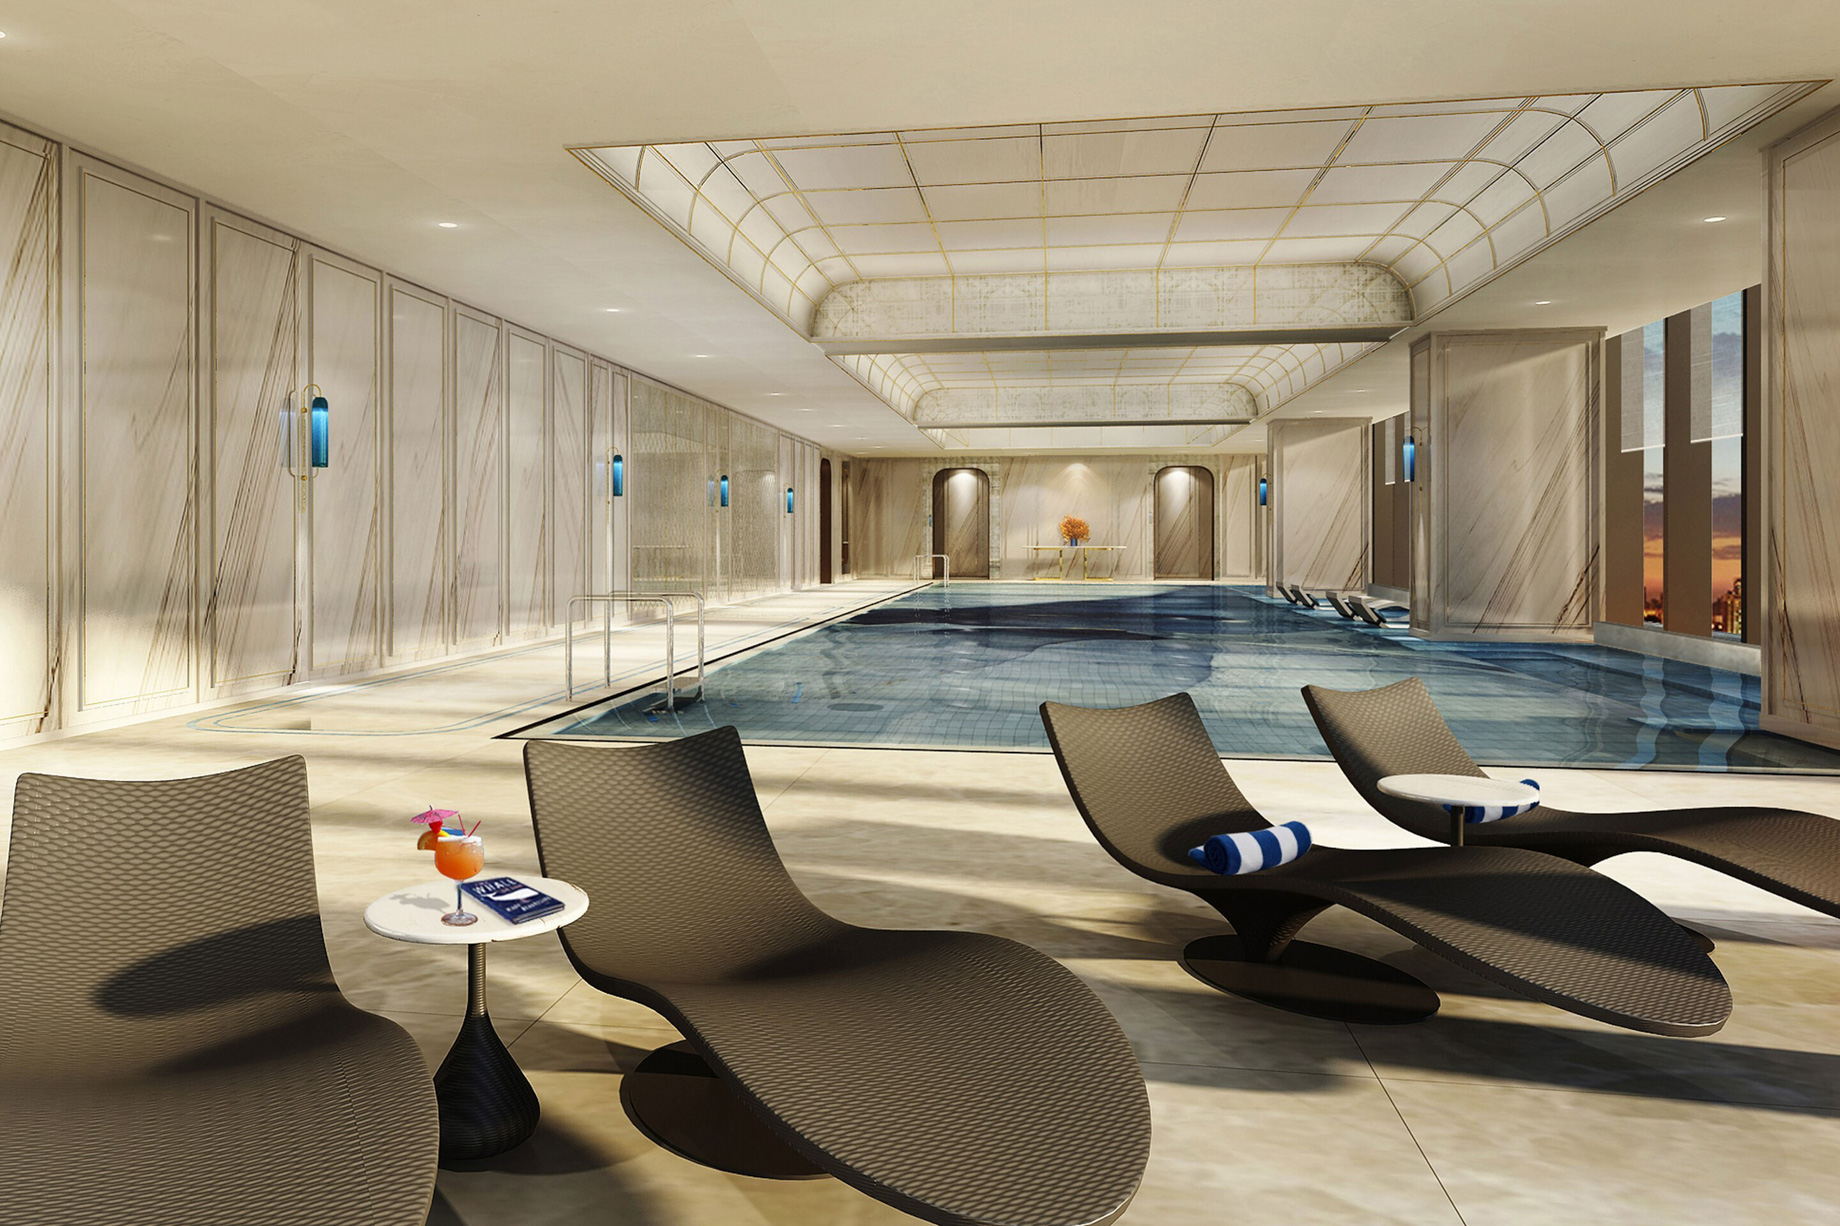 The St. Regis Qingdao Hotel - Qingdao, Shandong, China - Infinity Pool